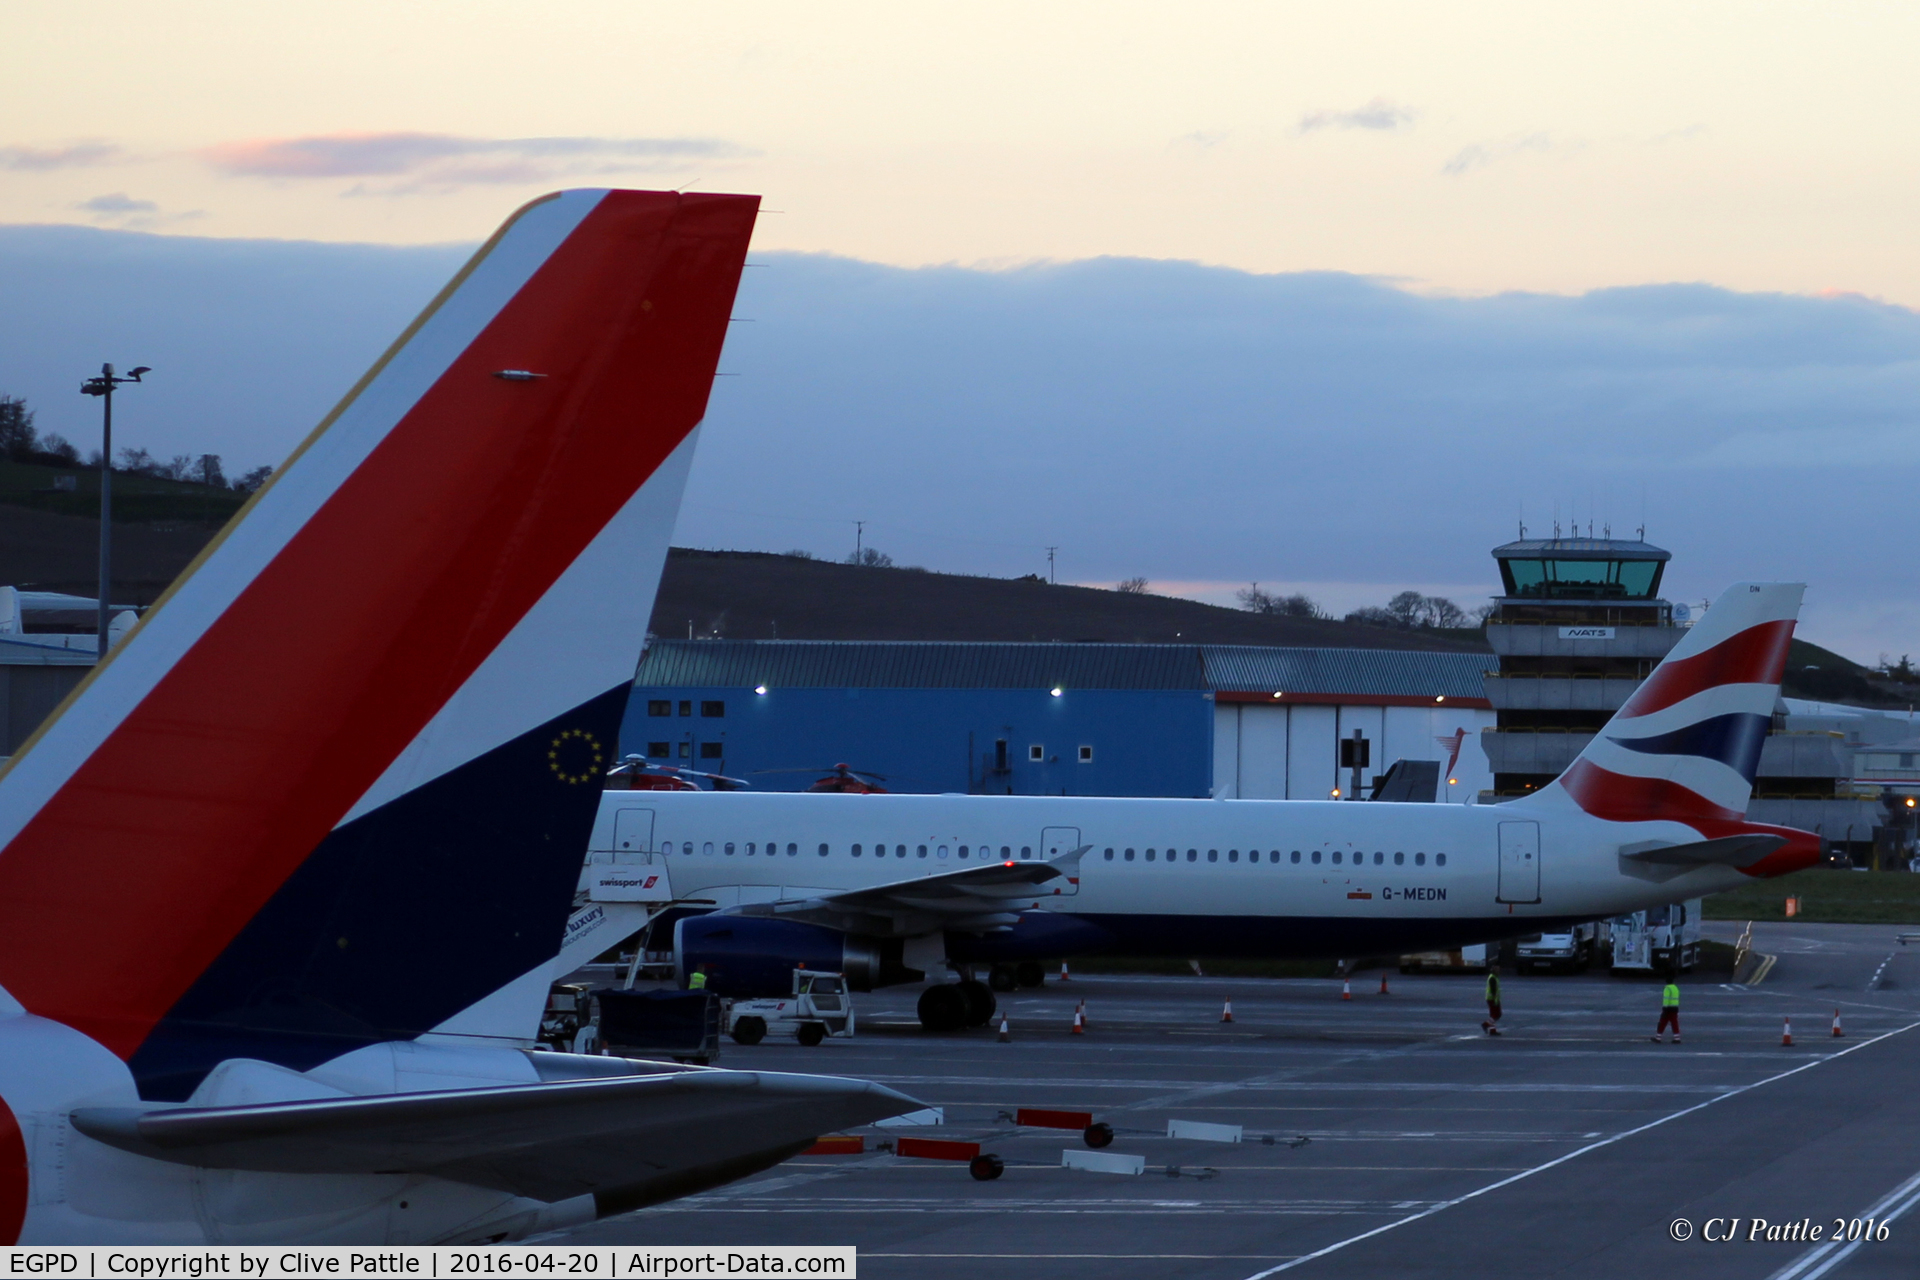 Aberdeen Airport, Aberdeen, Scotland United Kingdom (EGPD) - View of the gates and main apron at Aberdeen EGPD